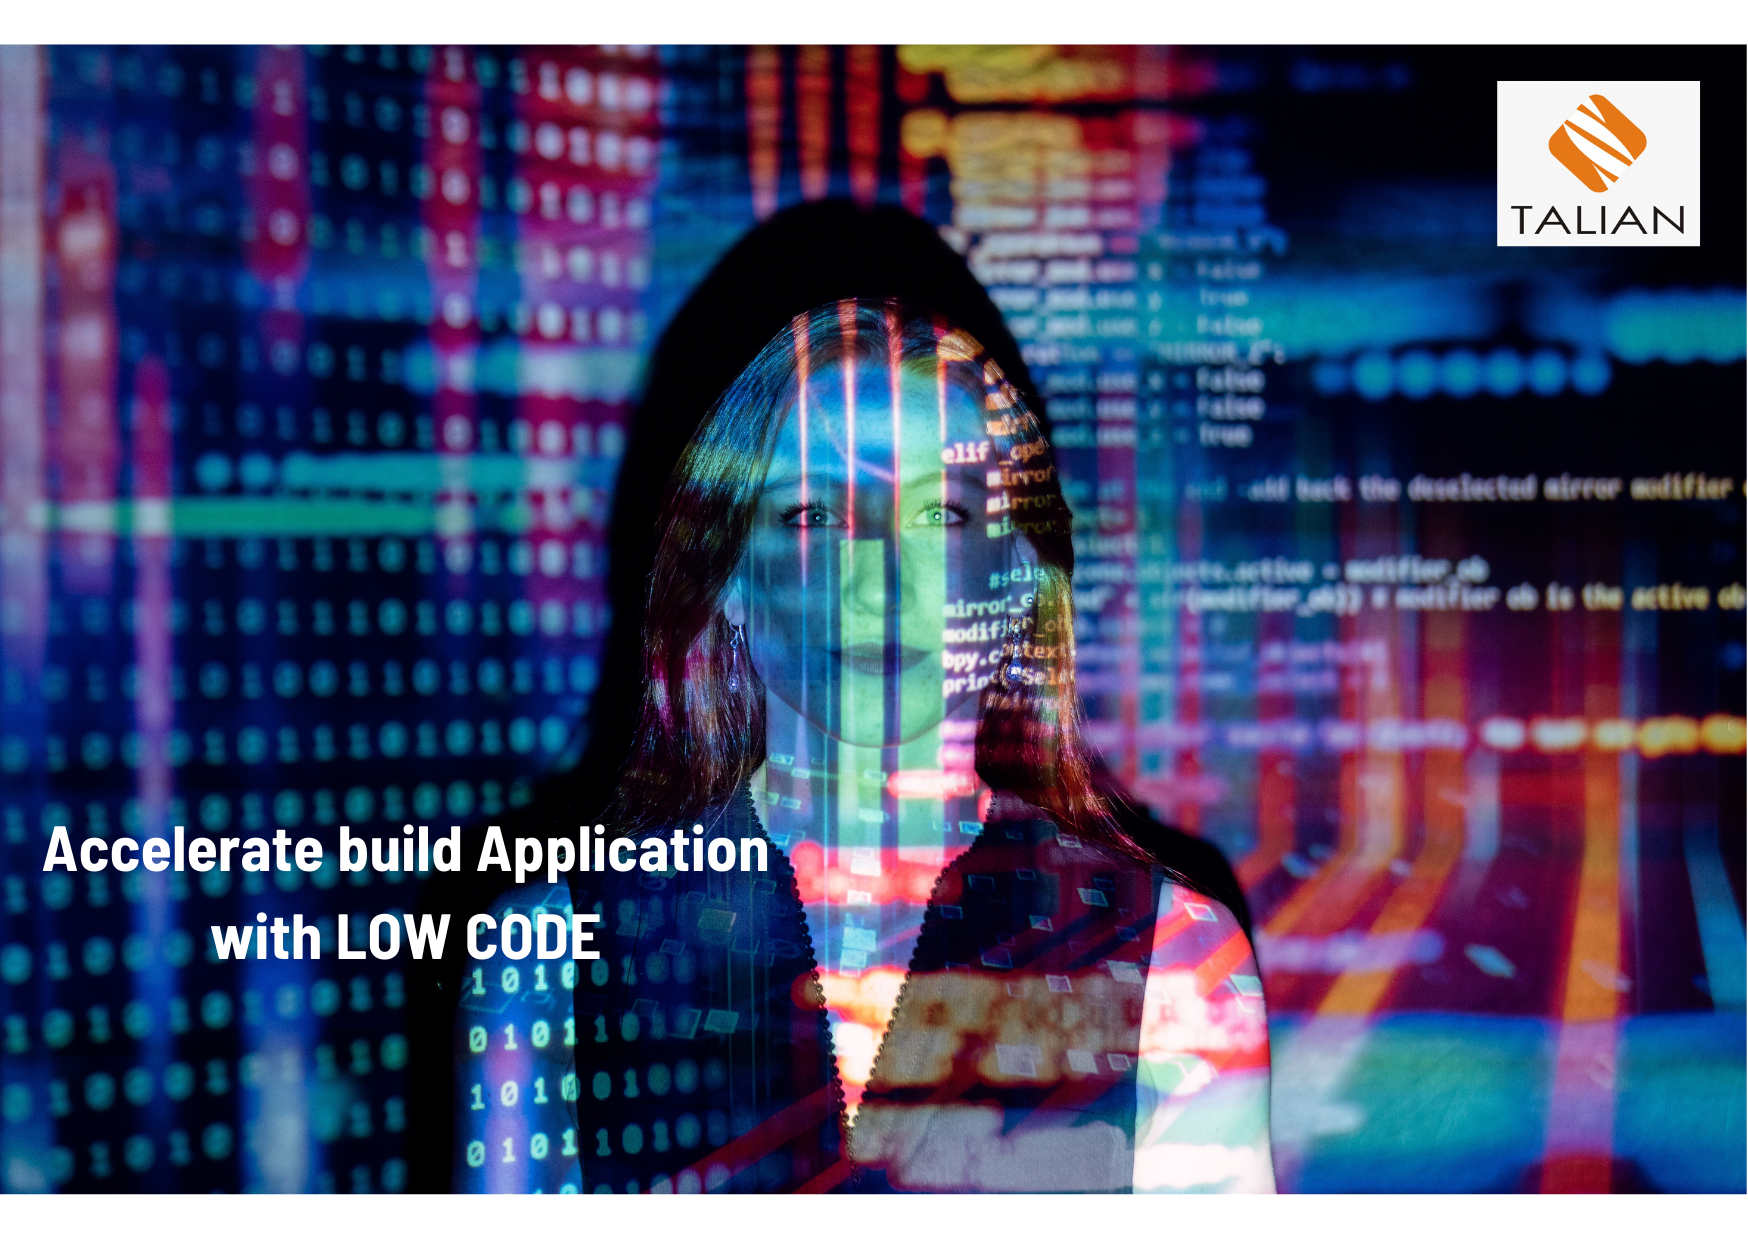 Low Code Application Platform